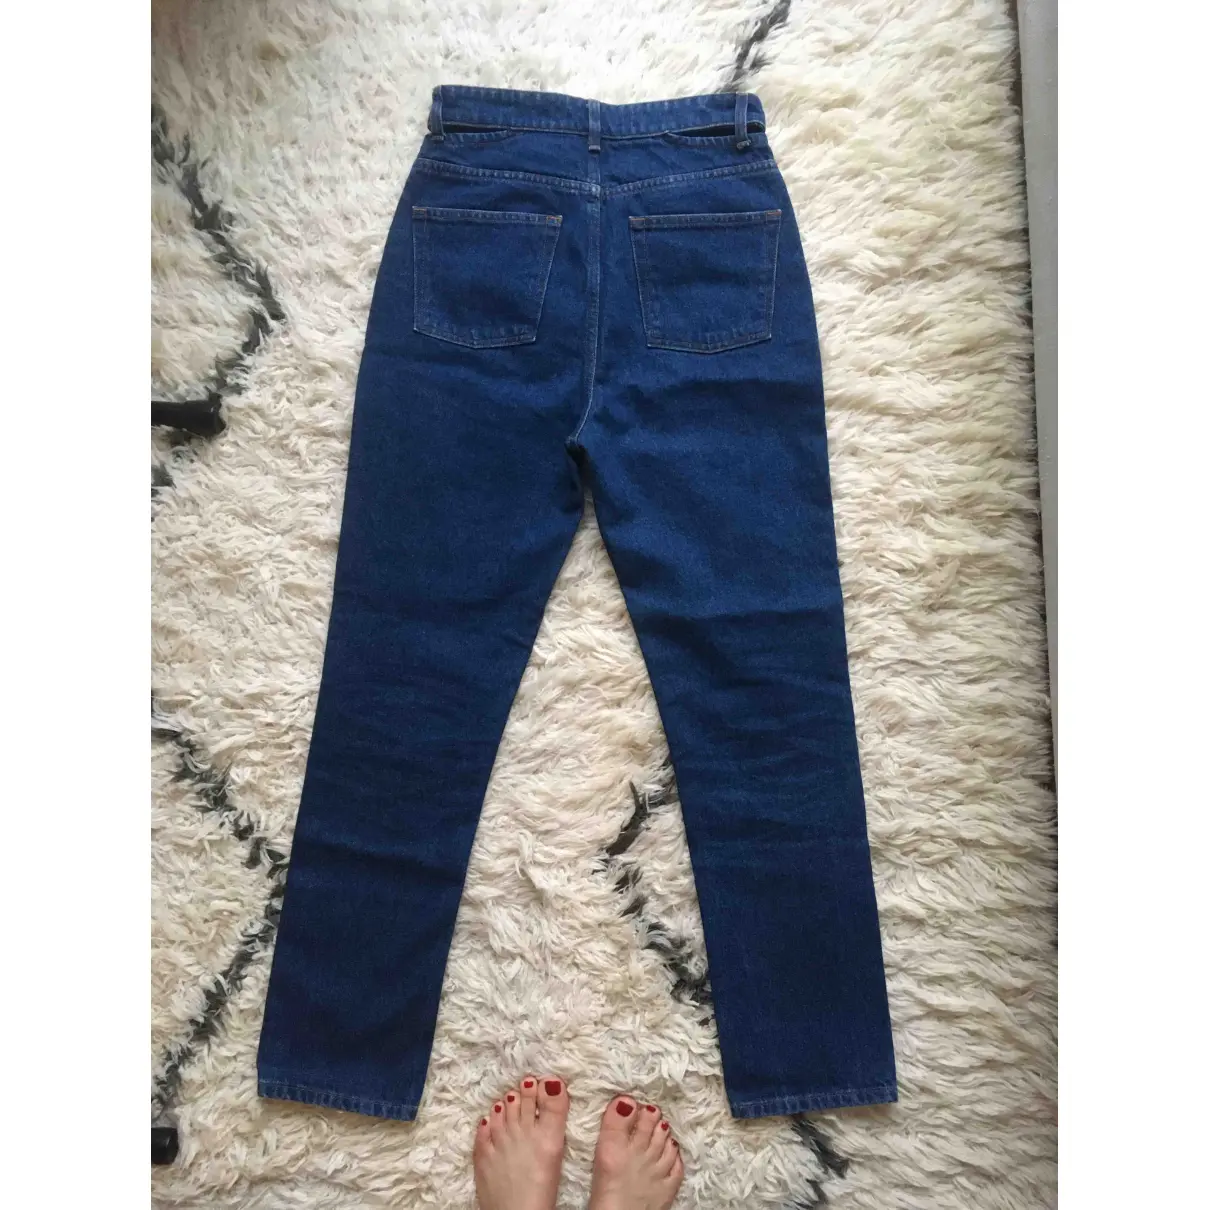 Buy Iro Straight jeans online